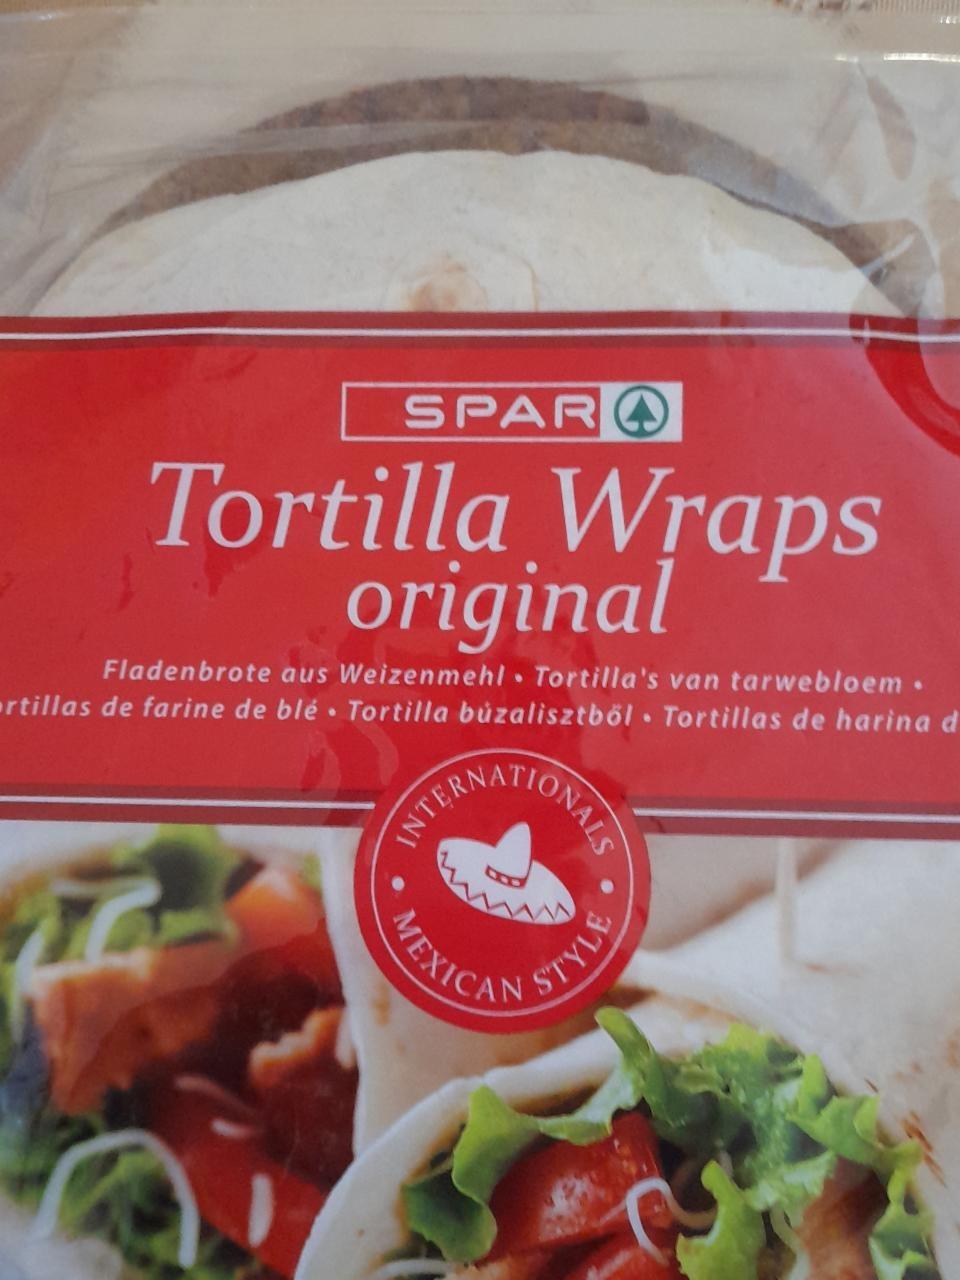 Képek - Tortilla Wraps original Spar